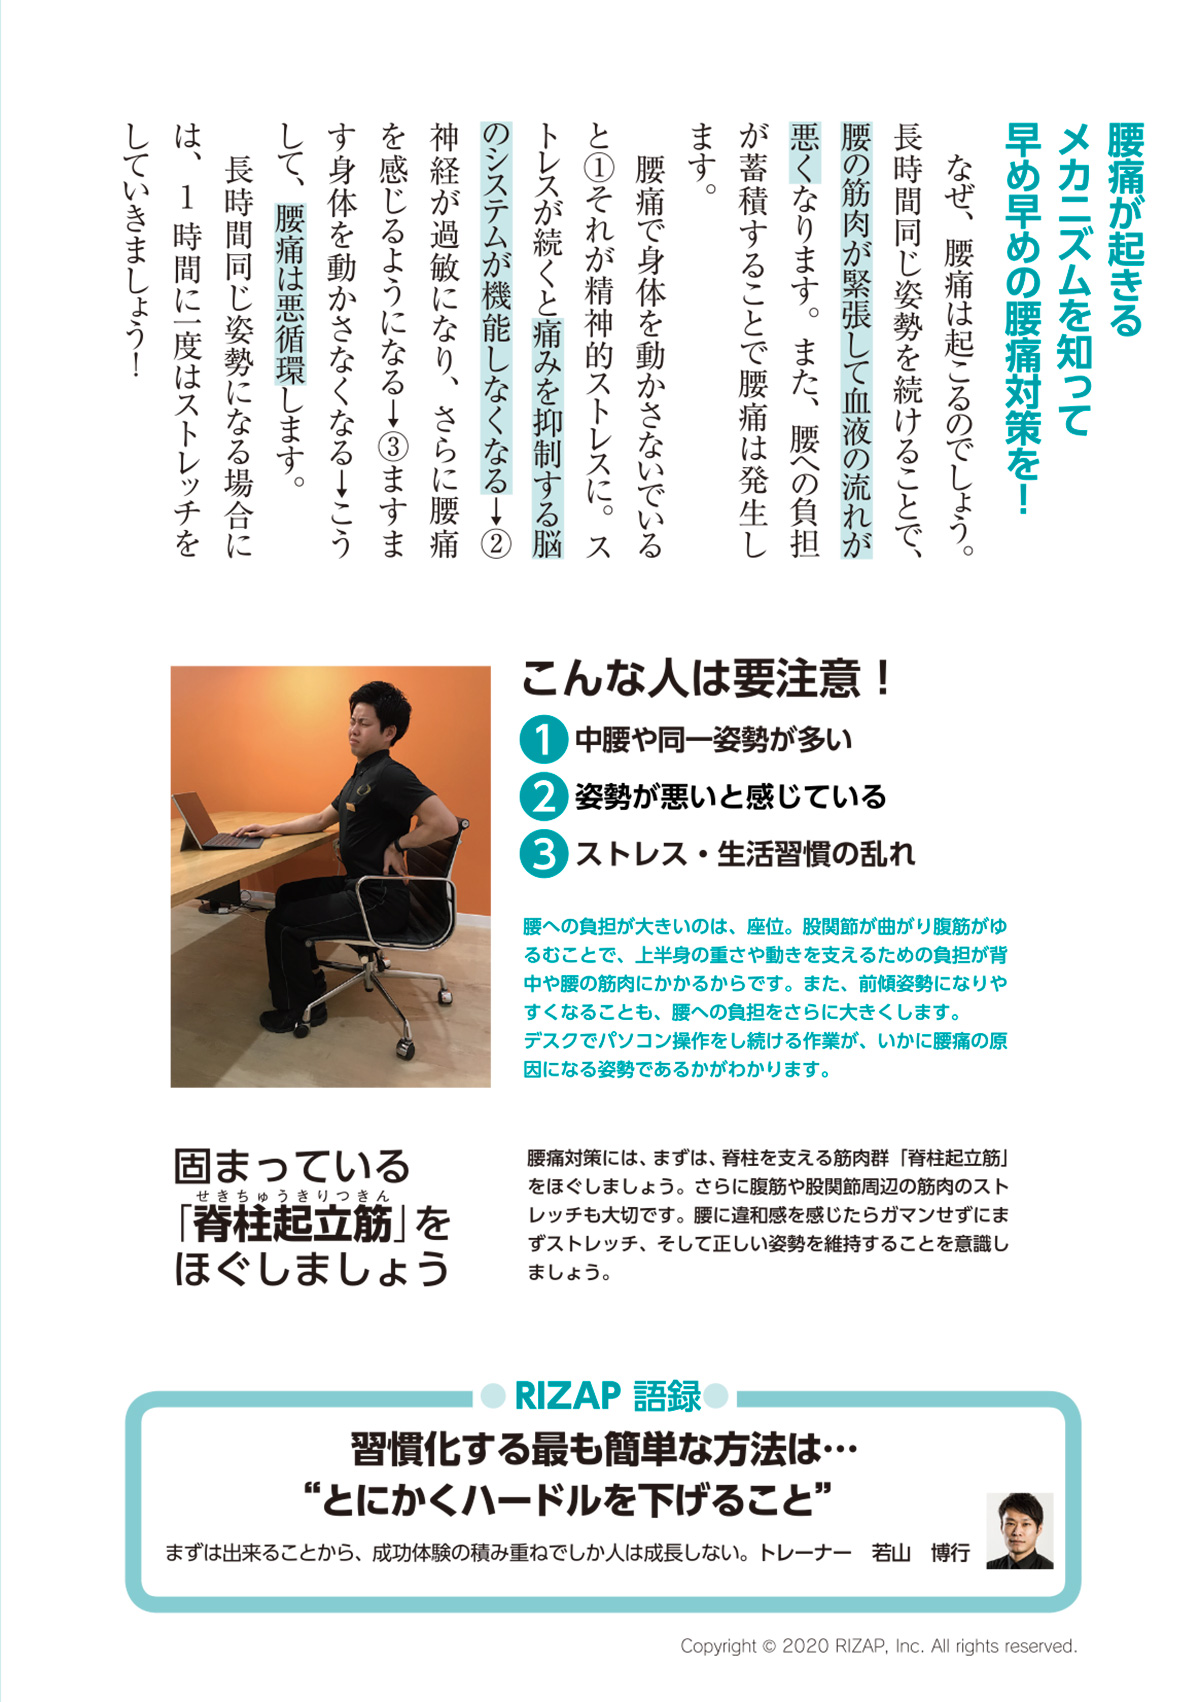 Rizapコラム 動画 腰痛対策 を掲載しました 神建連国保 神奈川県建設連合国民健康保険組合